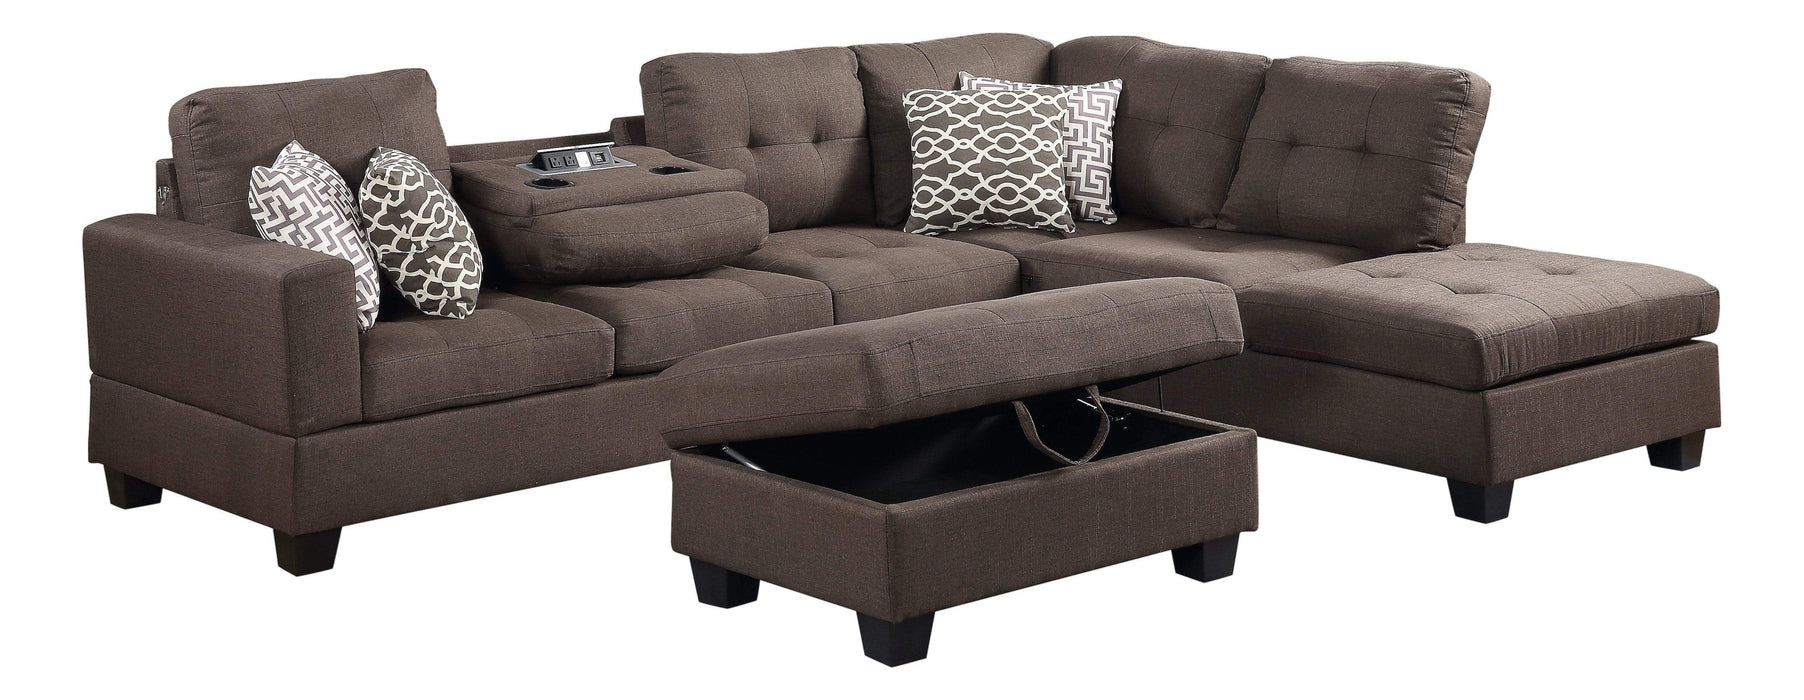 Kourtney Brown Fabric Sectional Sofa & Storage Ottoman